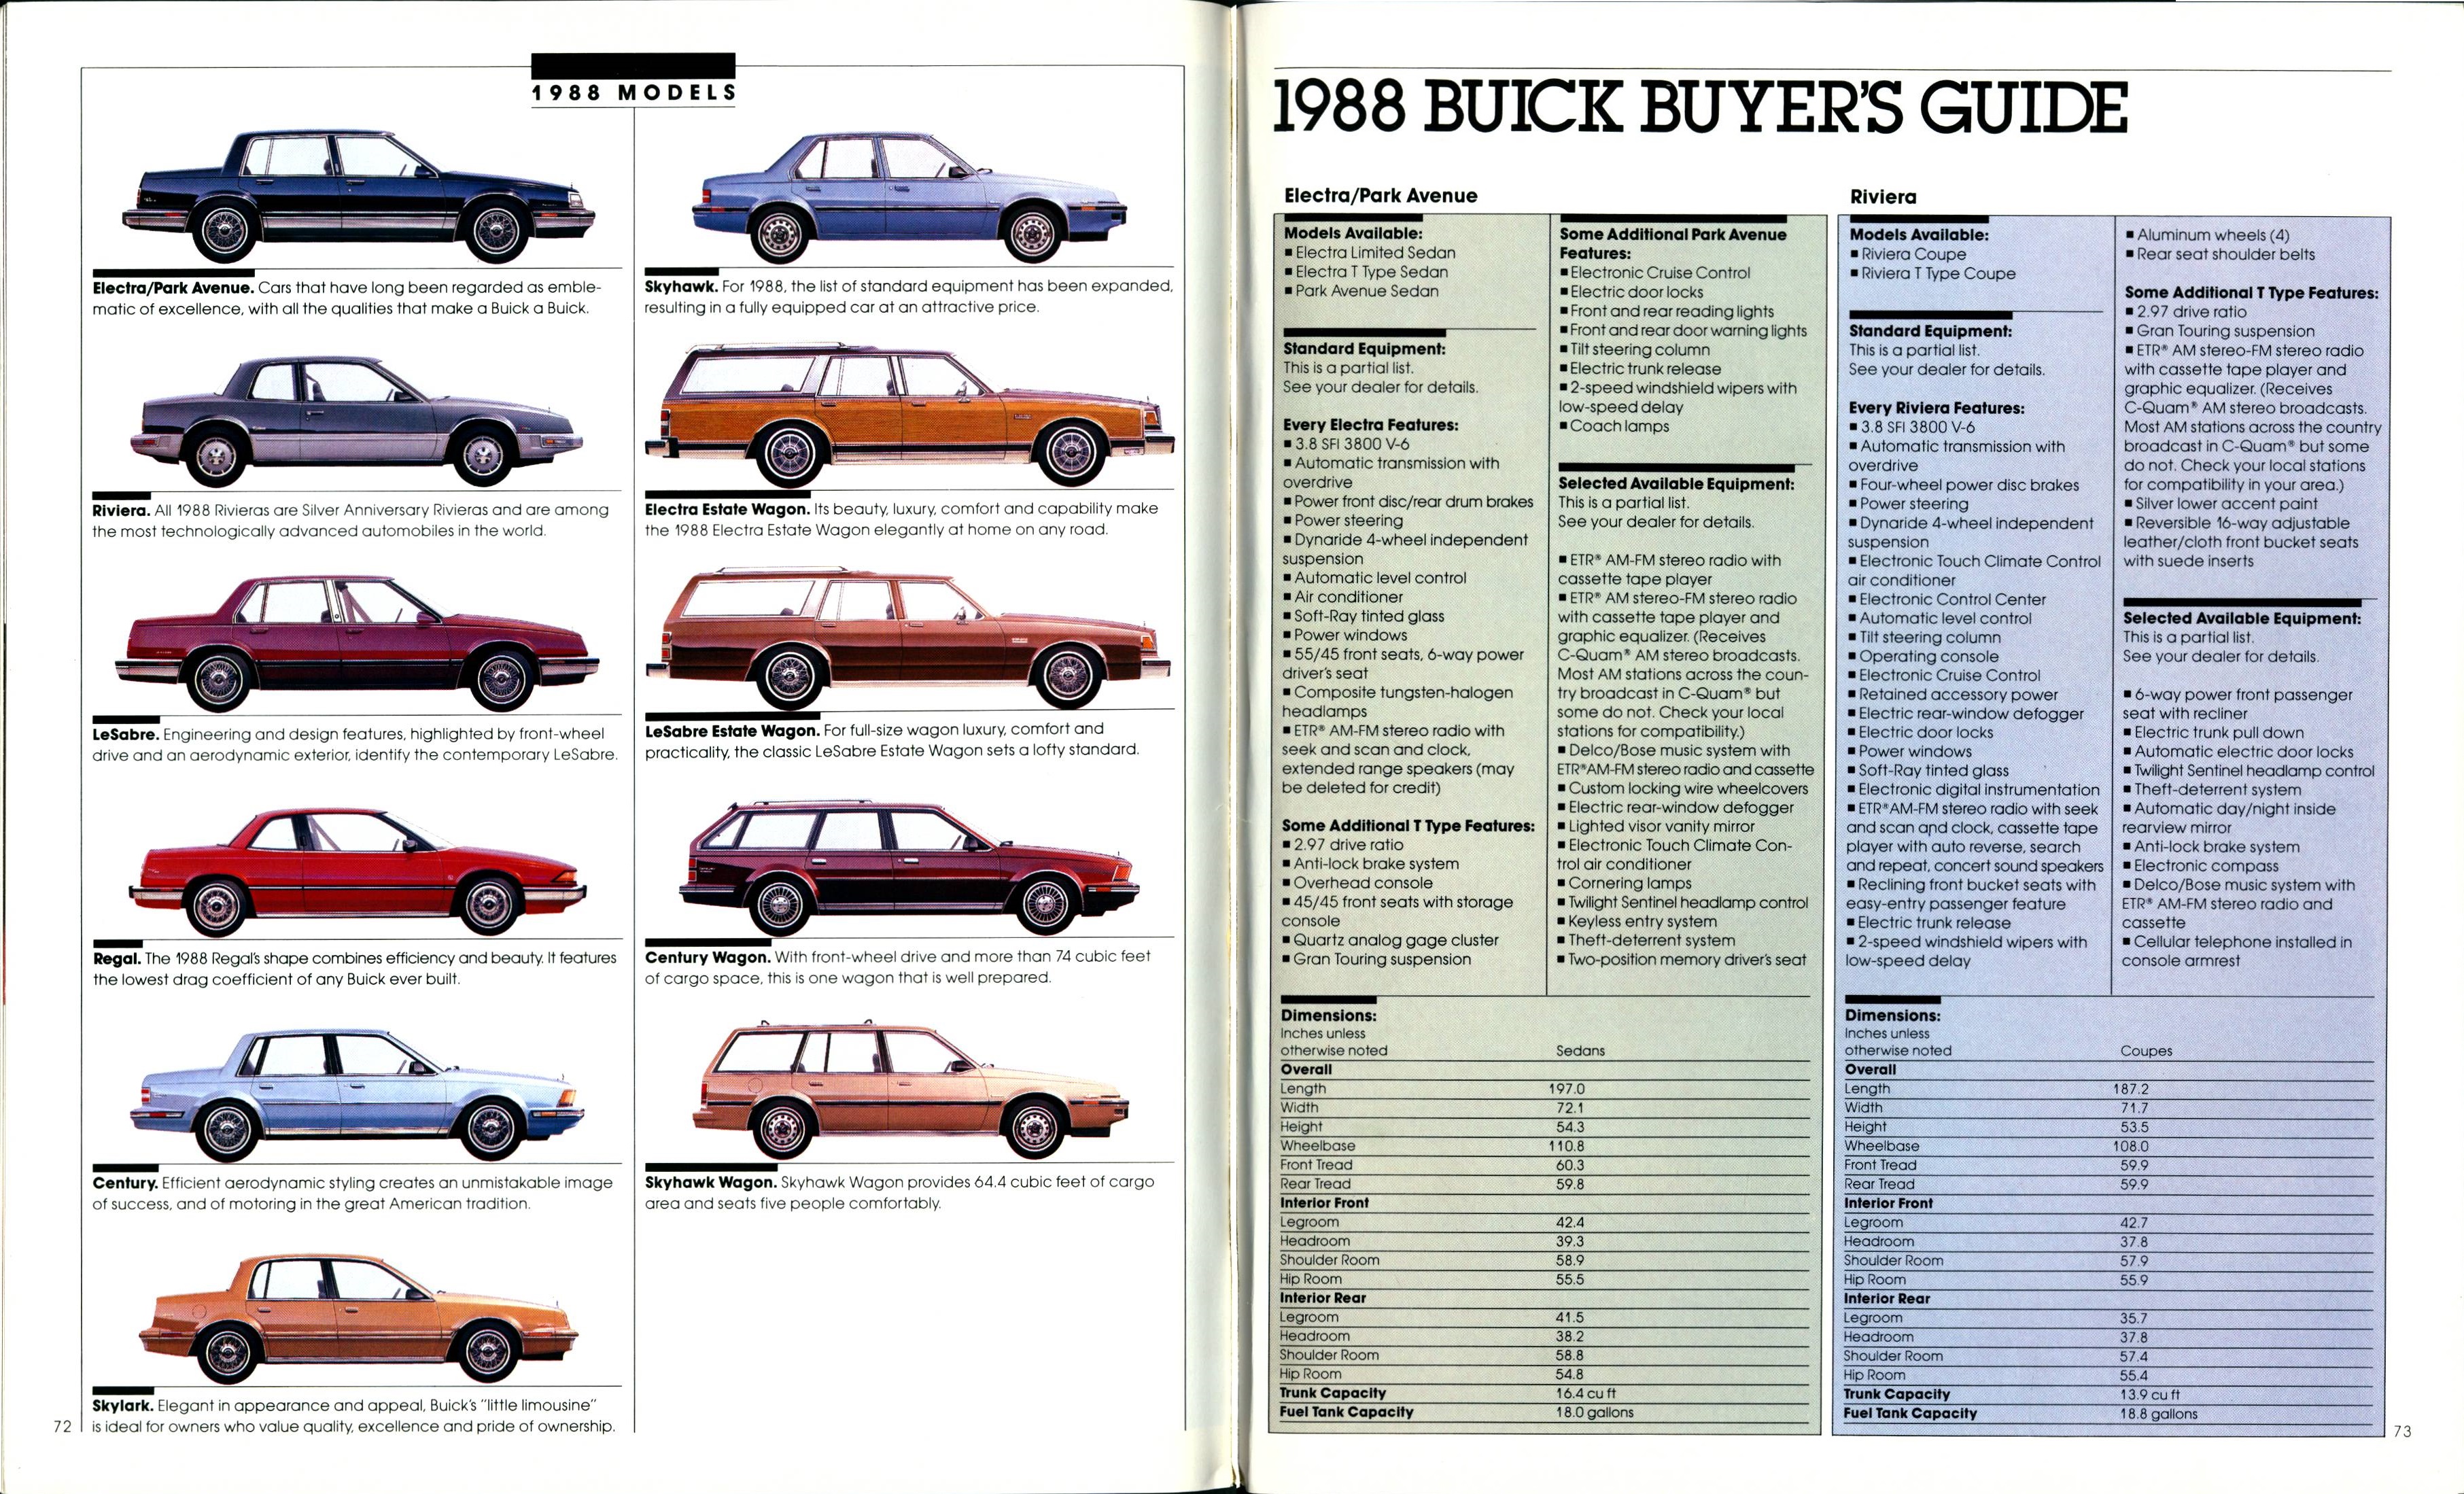 1988 Buick Full Line Prestige  Brochure-72-73